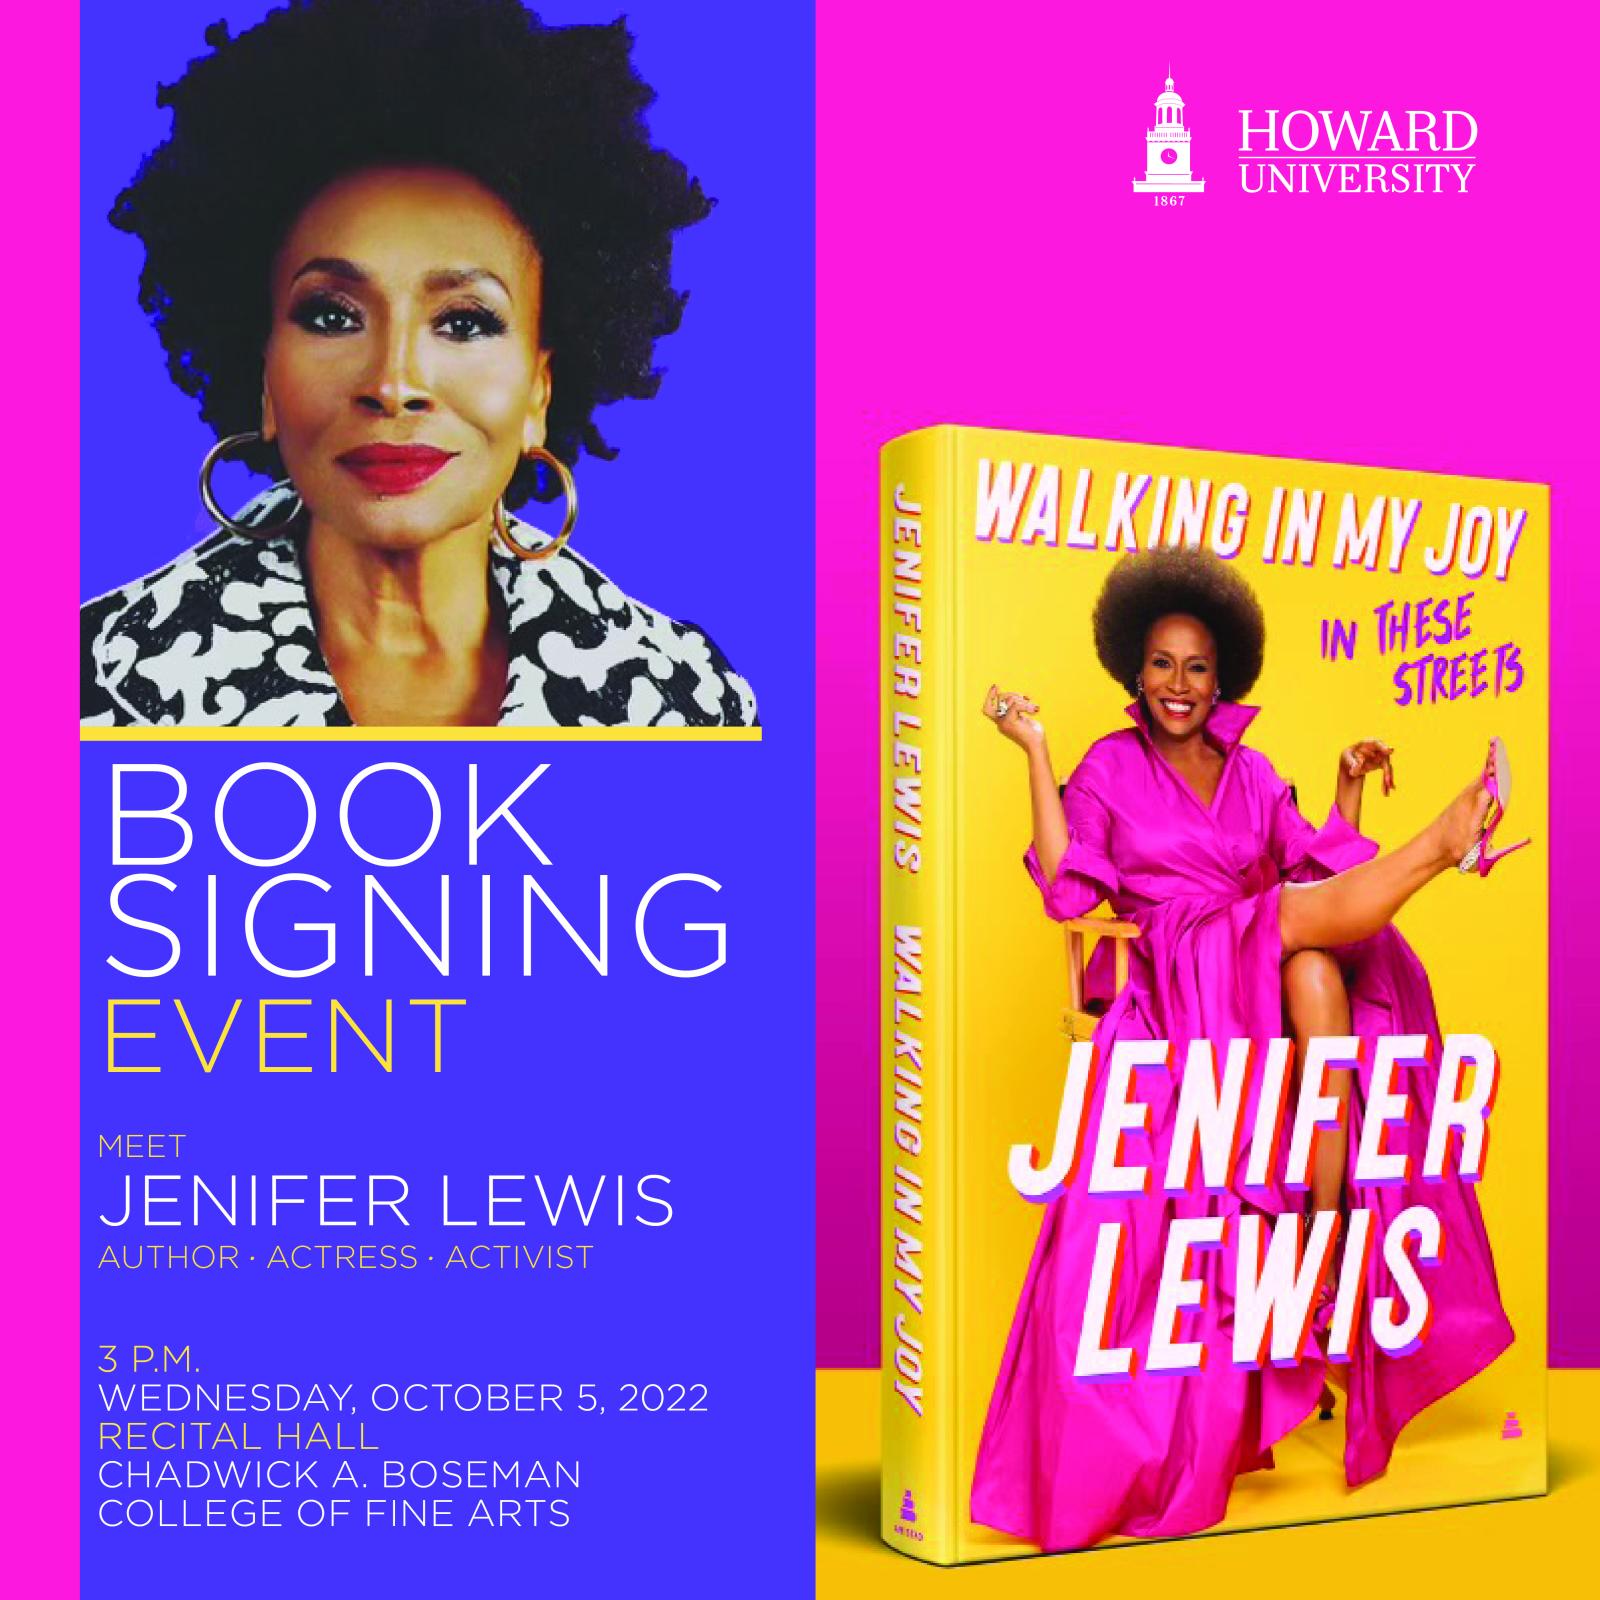 Book Signing Event Meet Jenifer Lewis Author, Actress, Activist 3 P.M. Wednesday Oct. 5 Recital Hall Chadwick A. Boseman College of Fine Arts